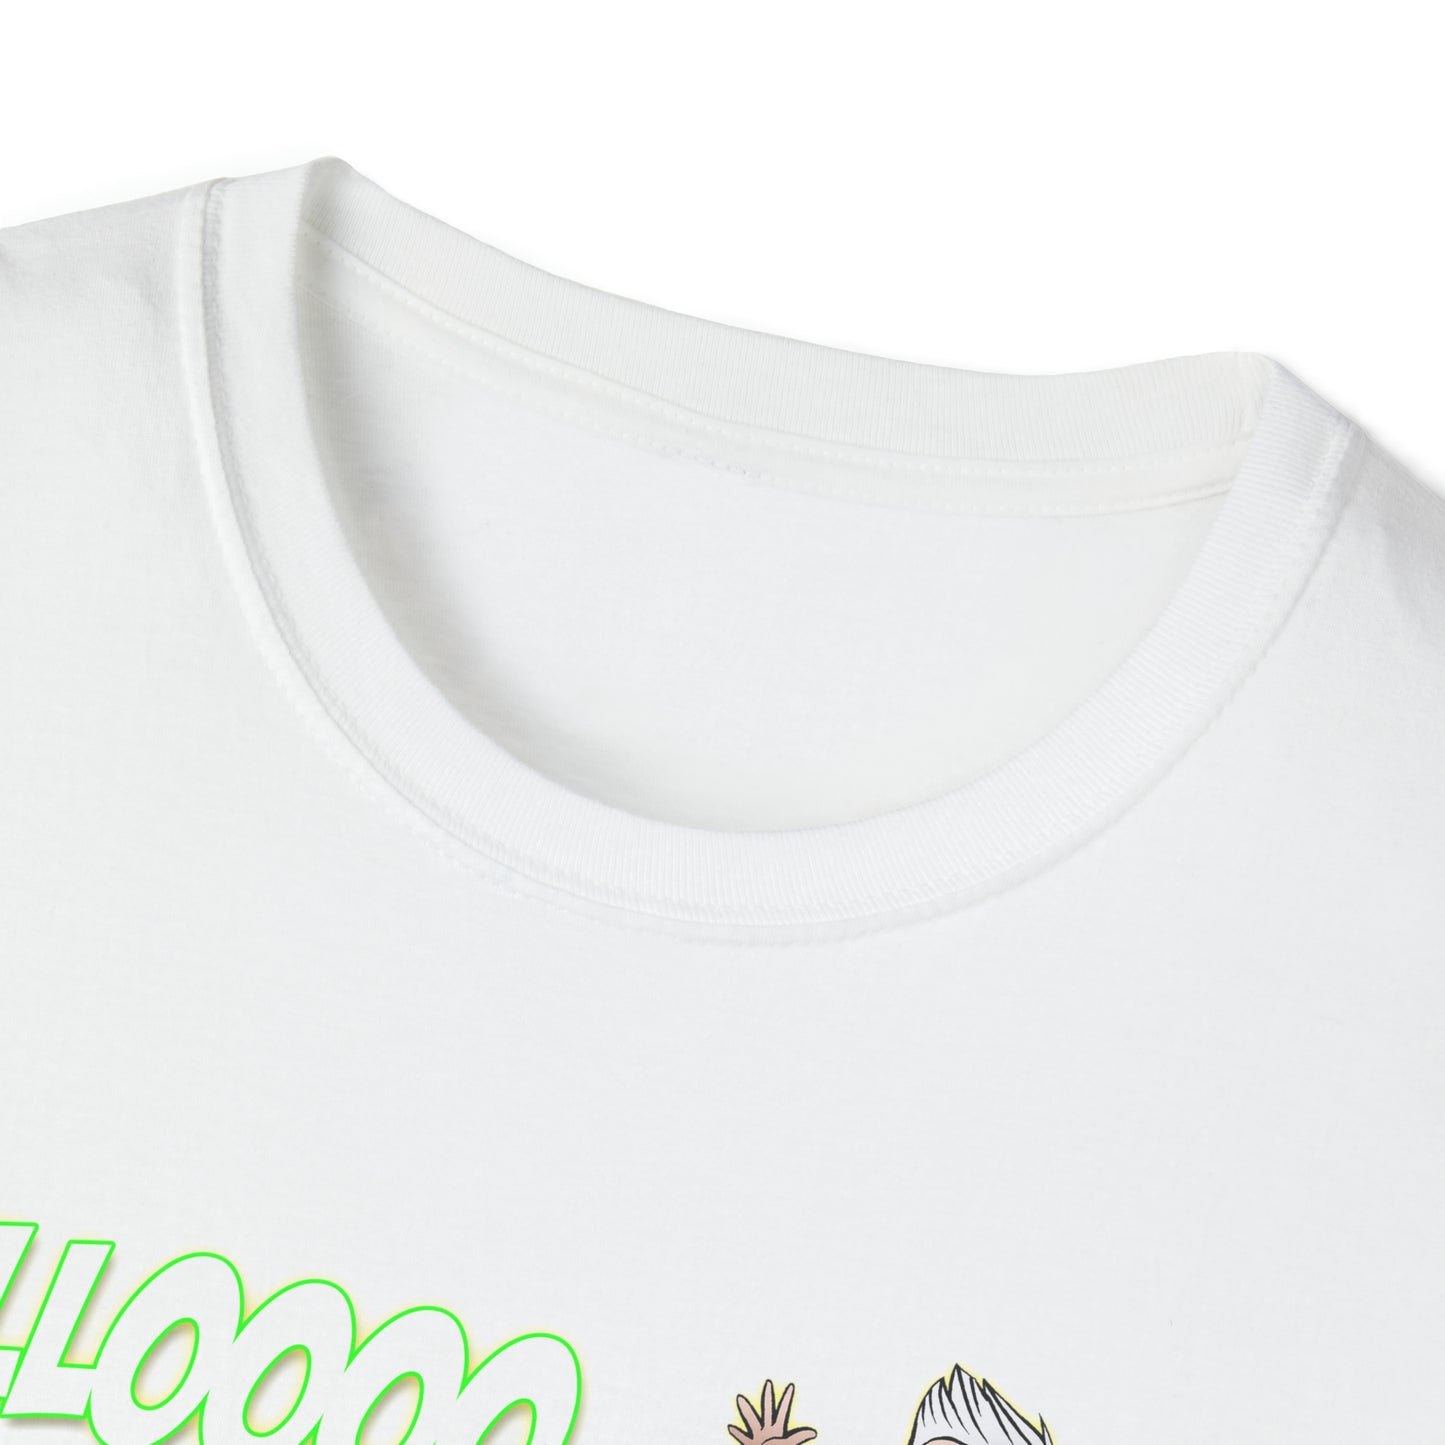 Rob Paulsen HELLOOO NURSE T-Shirt (Unisex Softstyle) 6 Colors